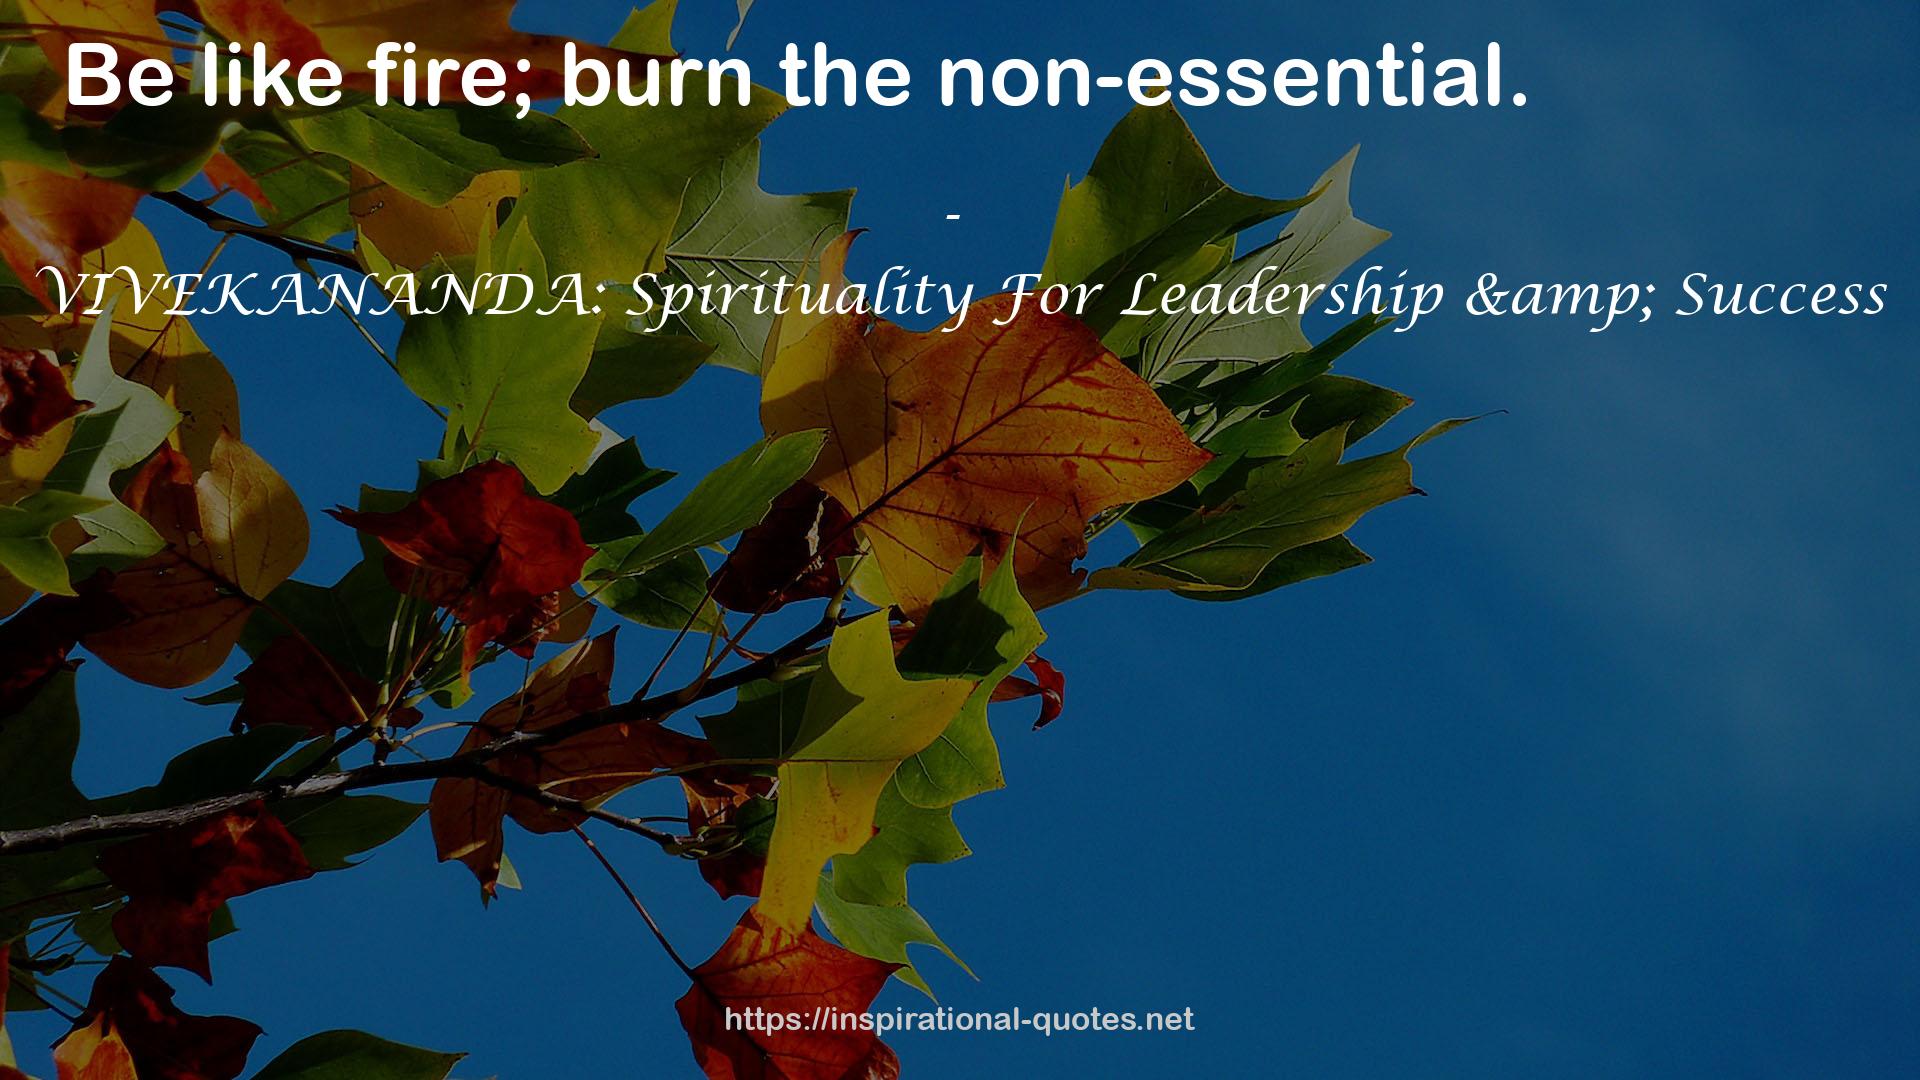 VIVEKANANDA: Spirituality For Leadership & Success QUOTES